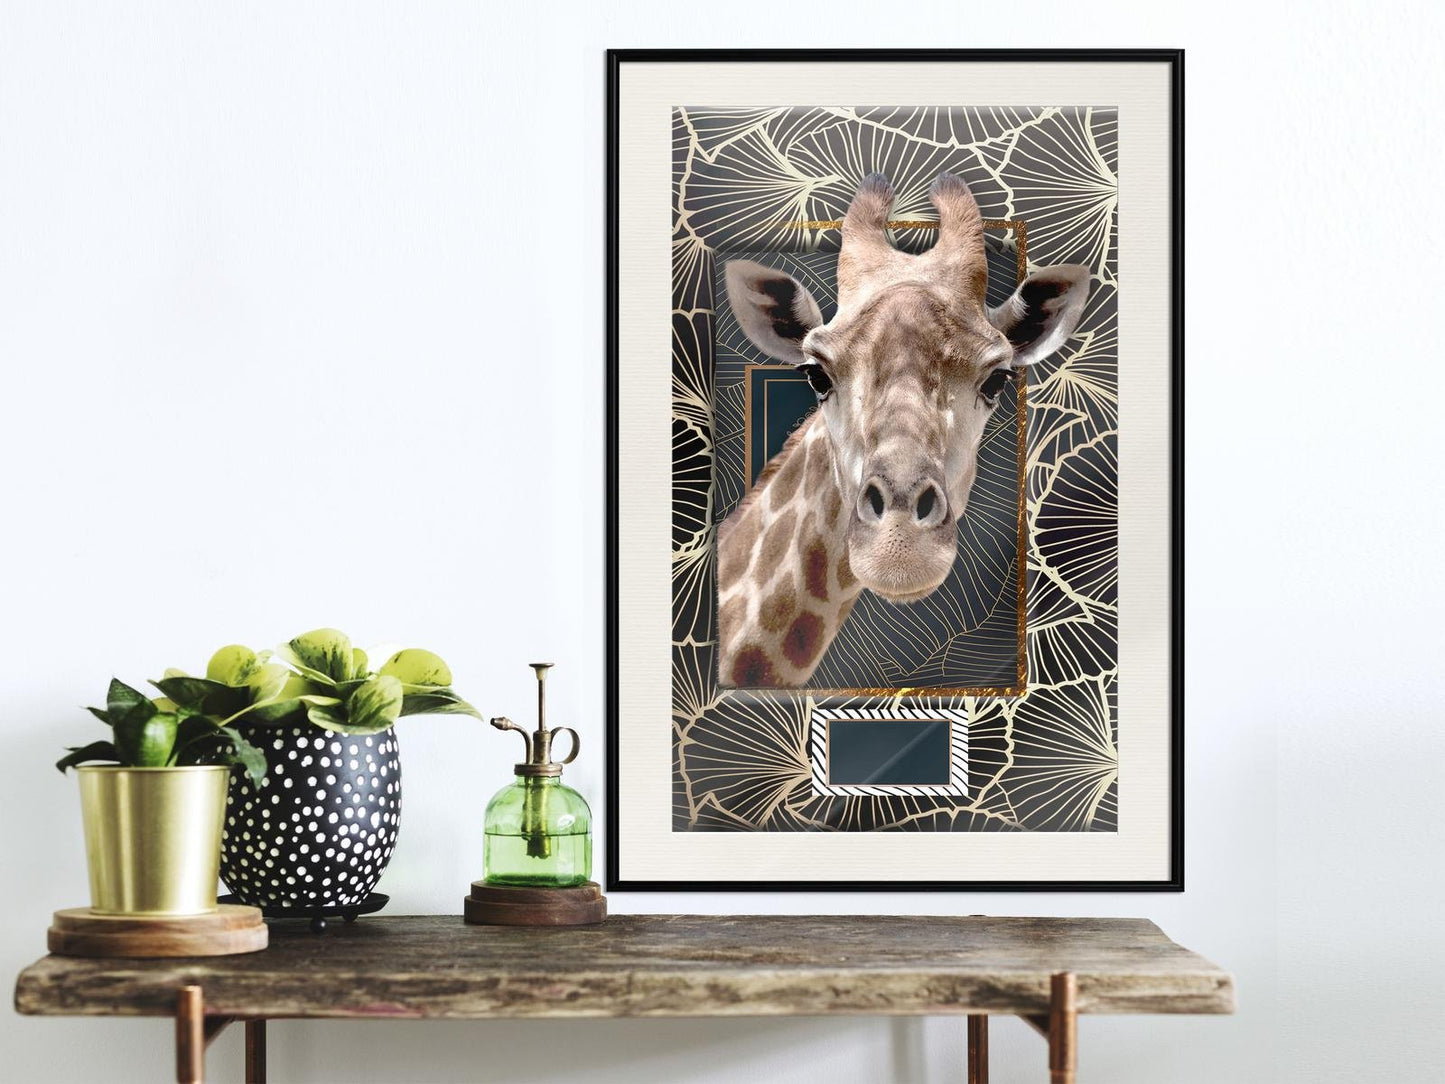 Giraffe in the Frame